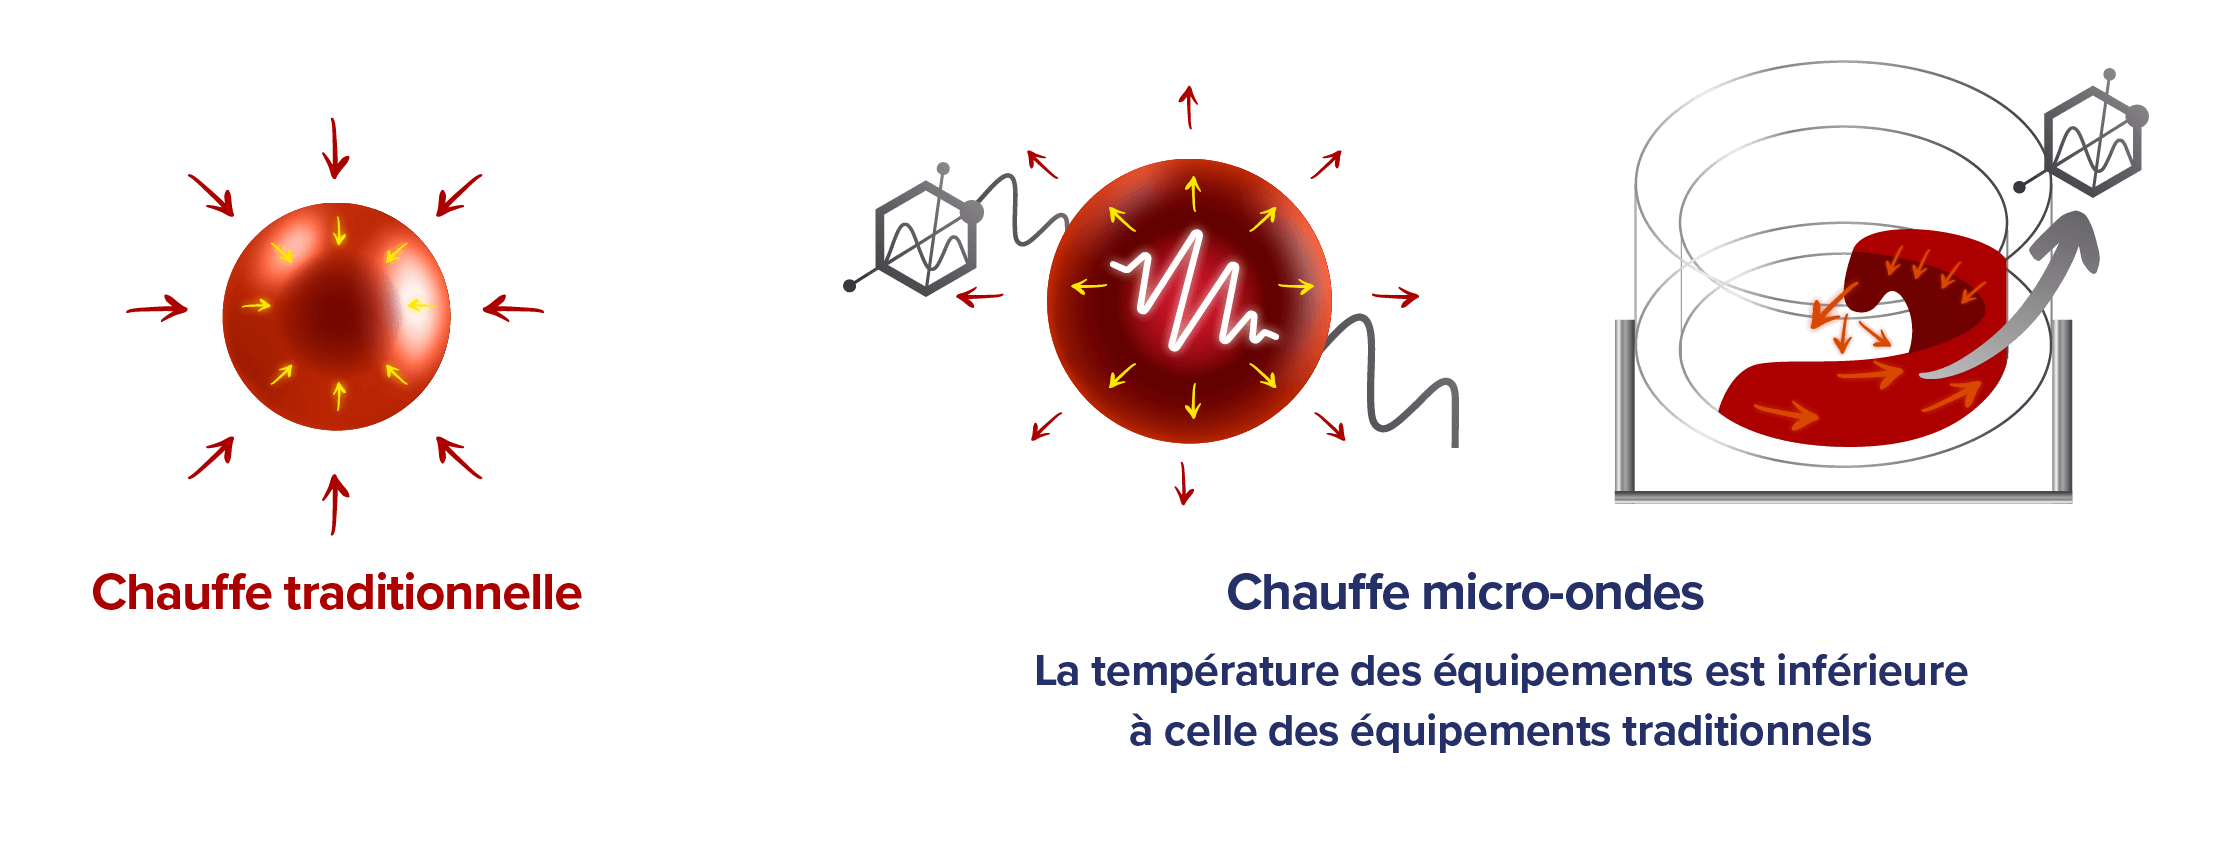 chauffe-micro-ondes-granulats-thermique-industriel-energie